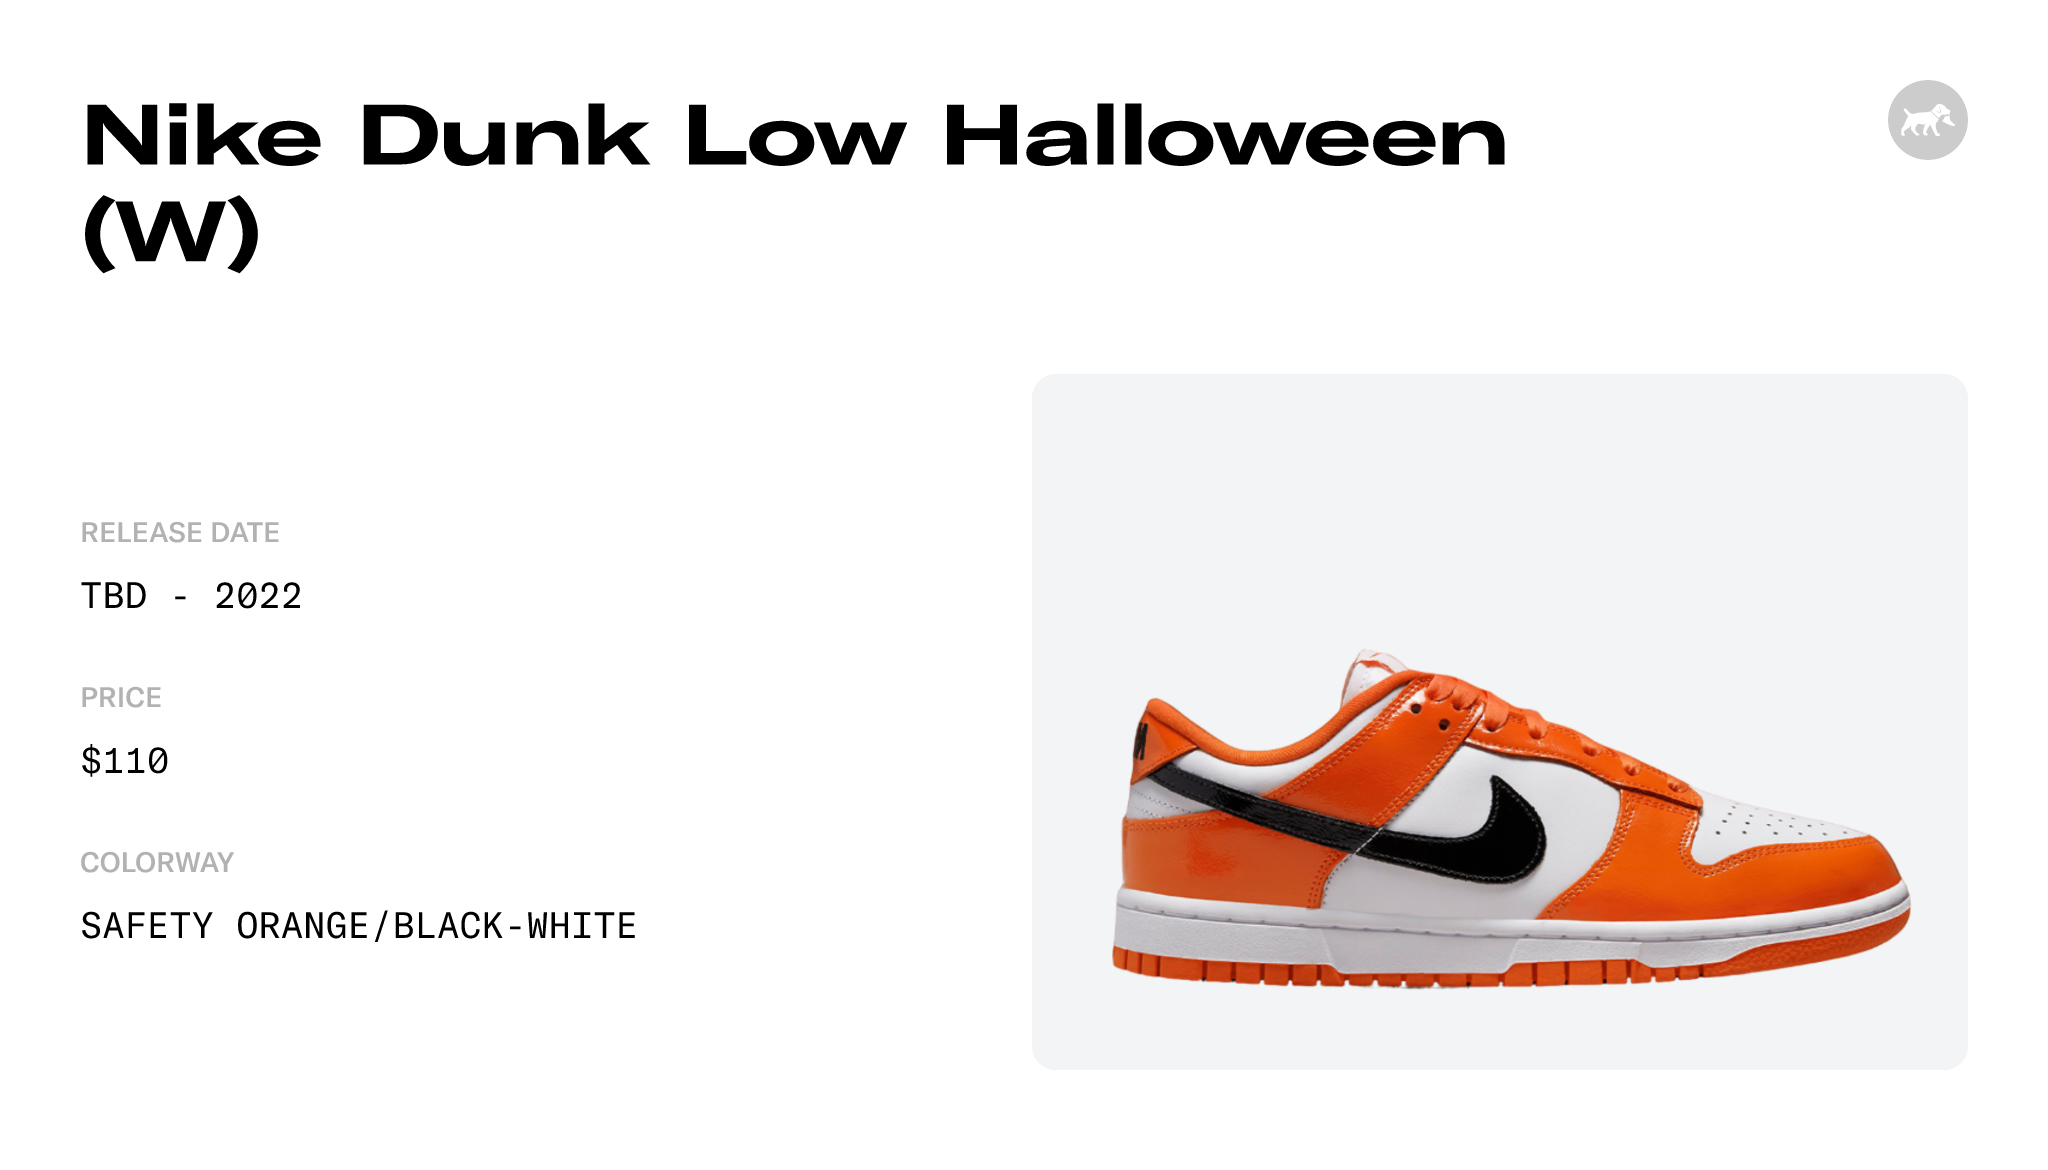 Nike Dunk LowOrange/Black Patent Leather DJ9955-800